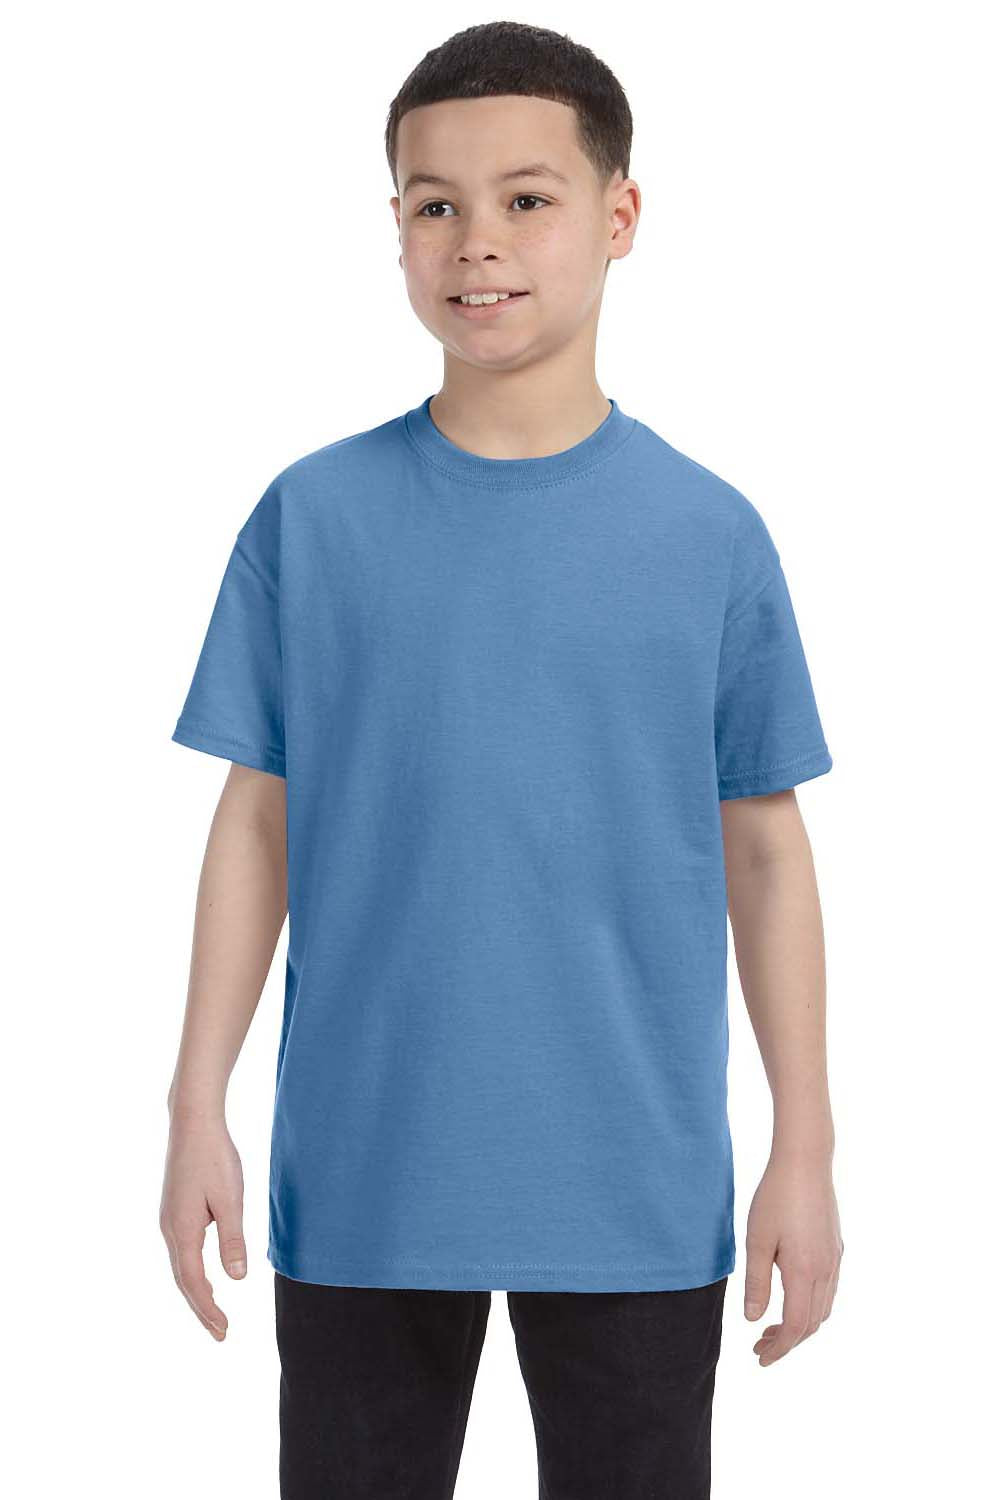 Hanes 54500 Youth ComfortSoft Short Sleeve Crewneck T-Shirt Carolina Blue Front